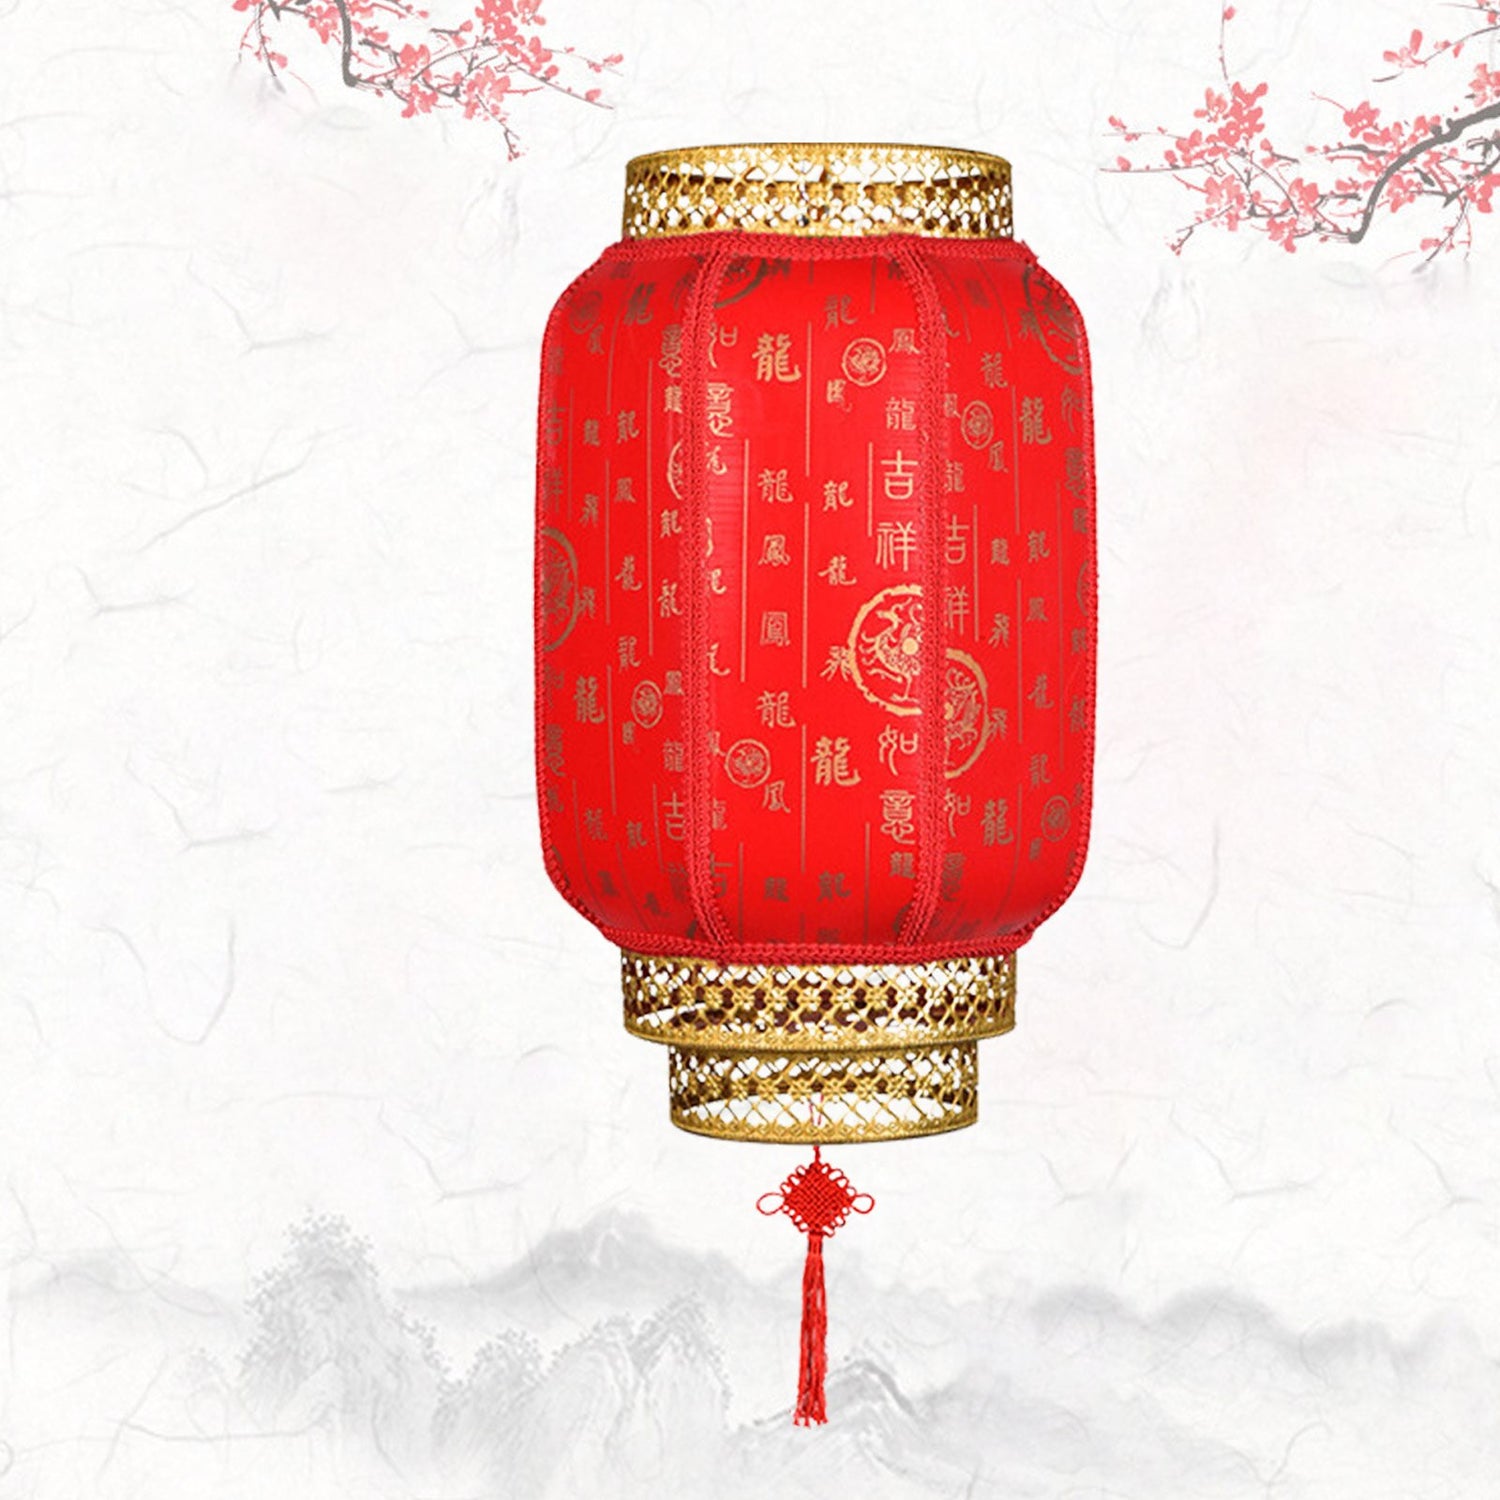 acheter lanterne chinoise